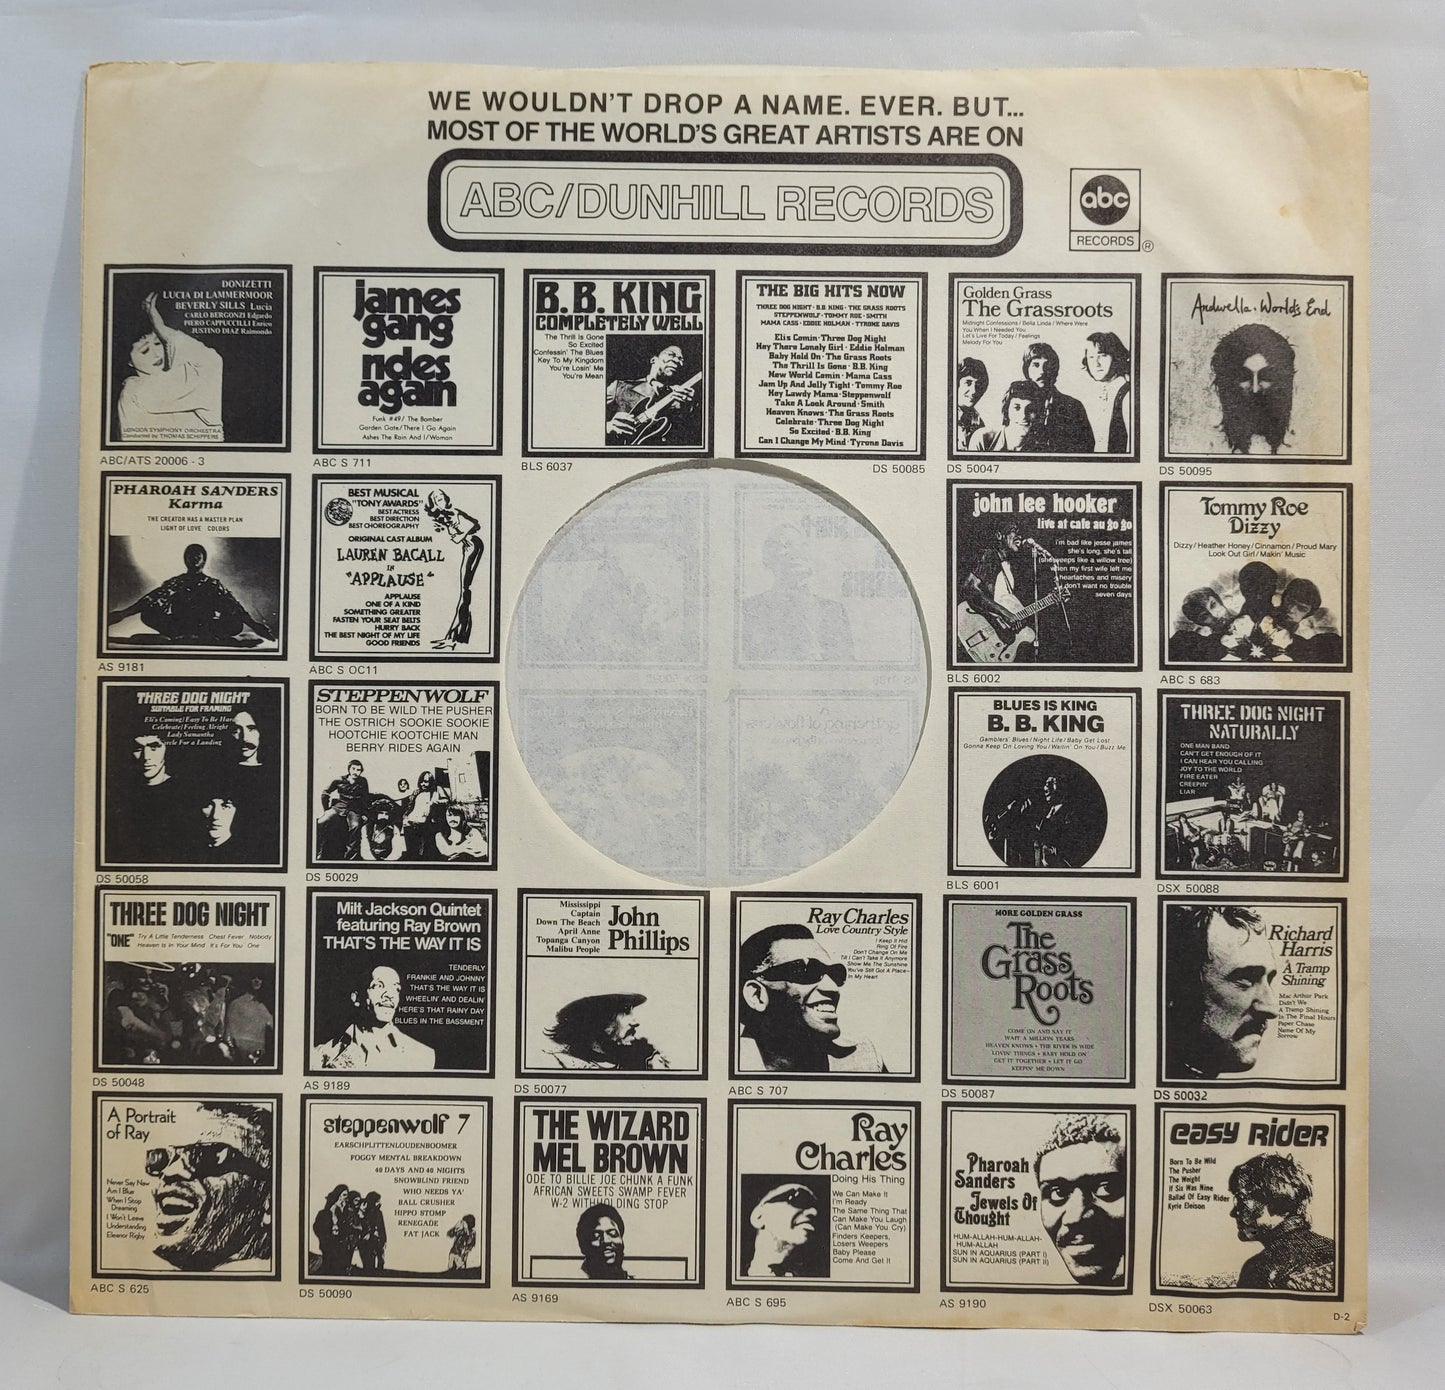 Soundtrack - South Pacific (With Original Broadway Cast) [Vinyl Record LP]